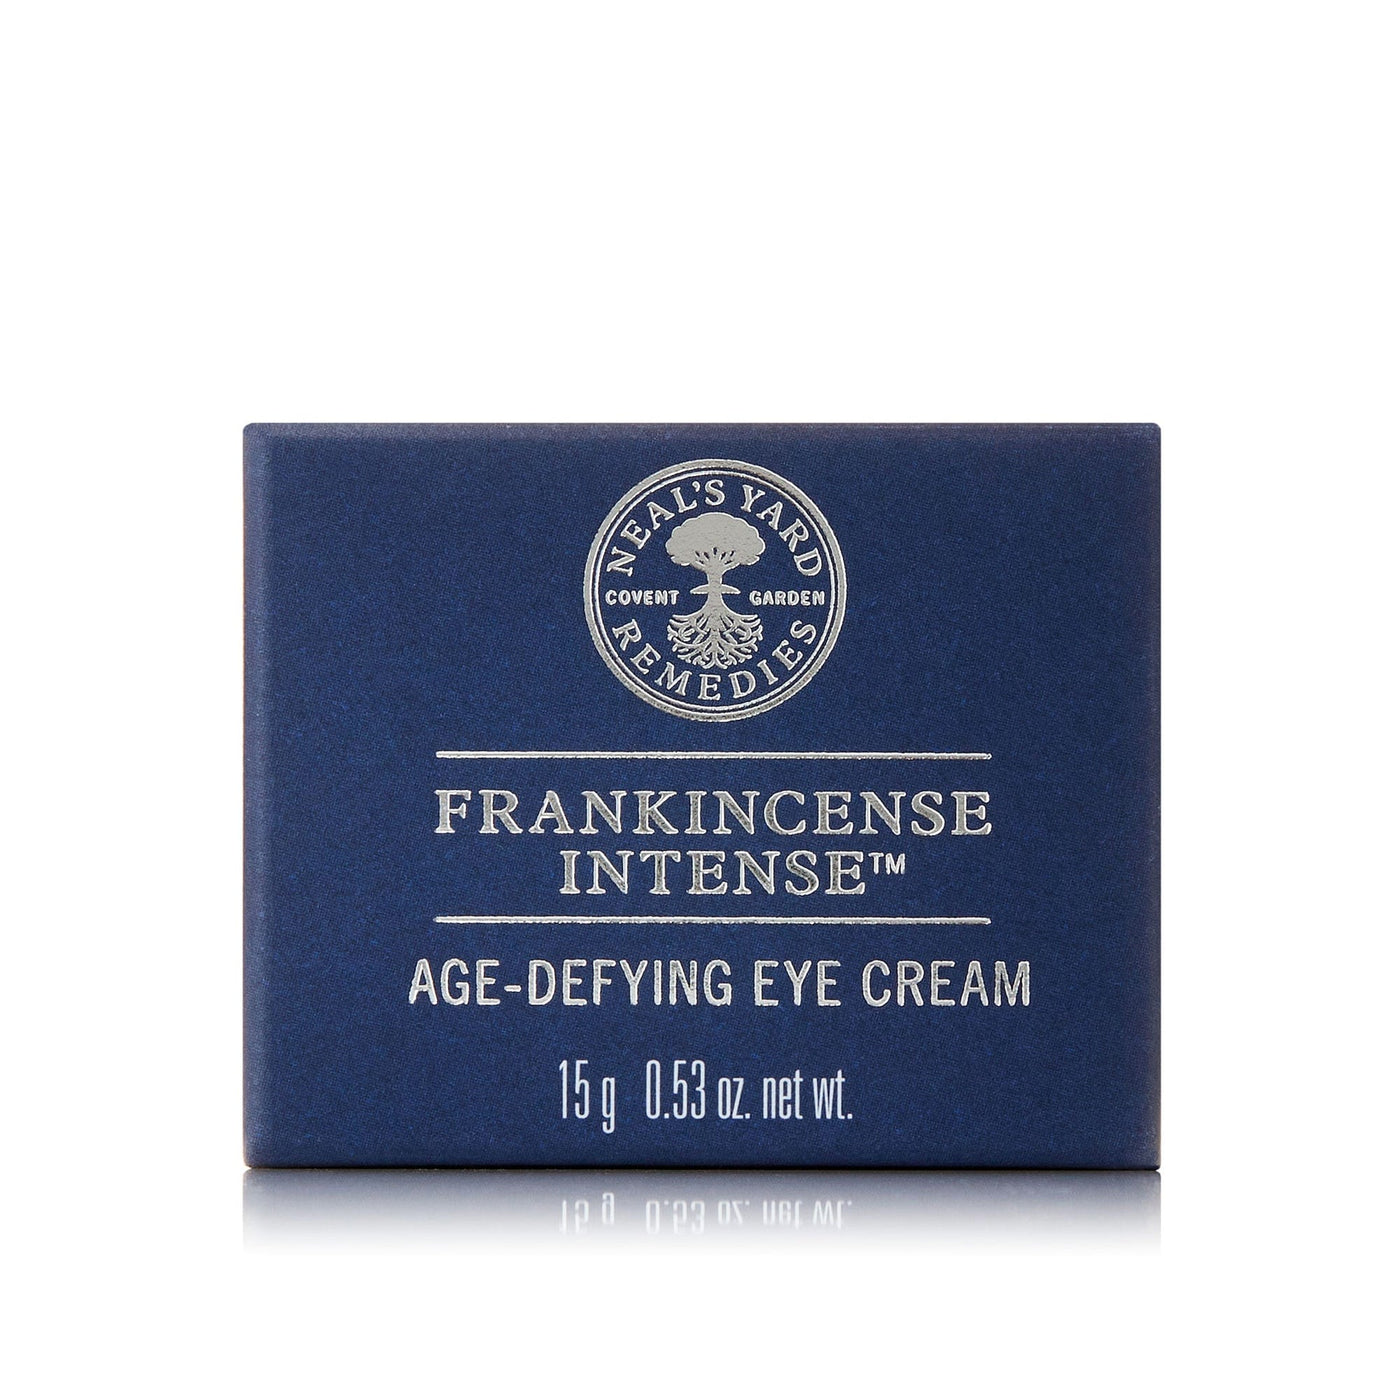 Neal's Yard Remedies Frankincense Intense™ Age-Defying Eye Cream 15g